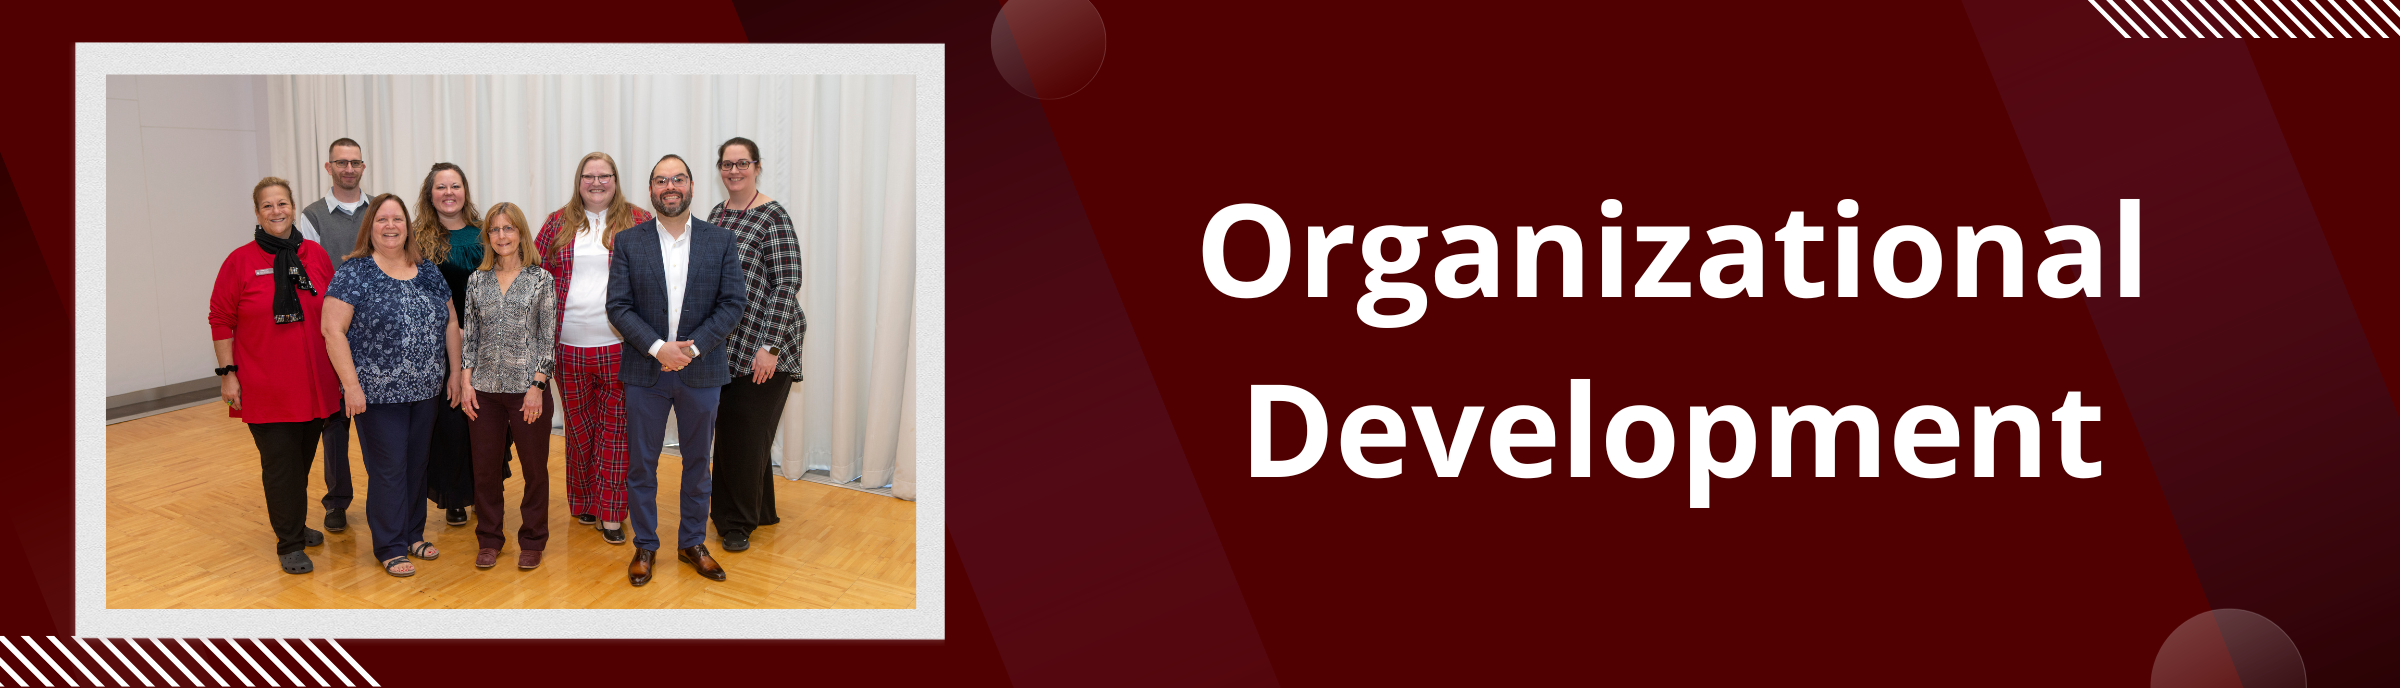 Welcome to Organizational Development